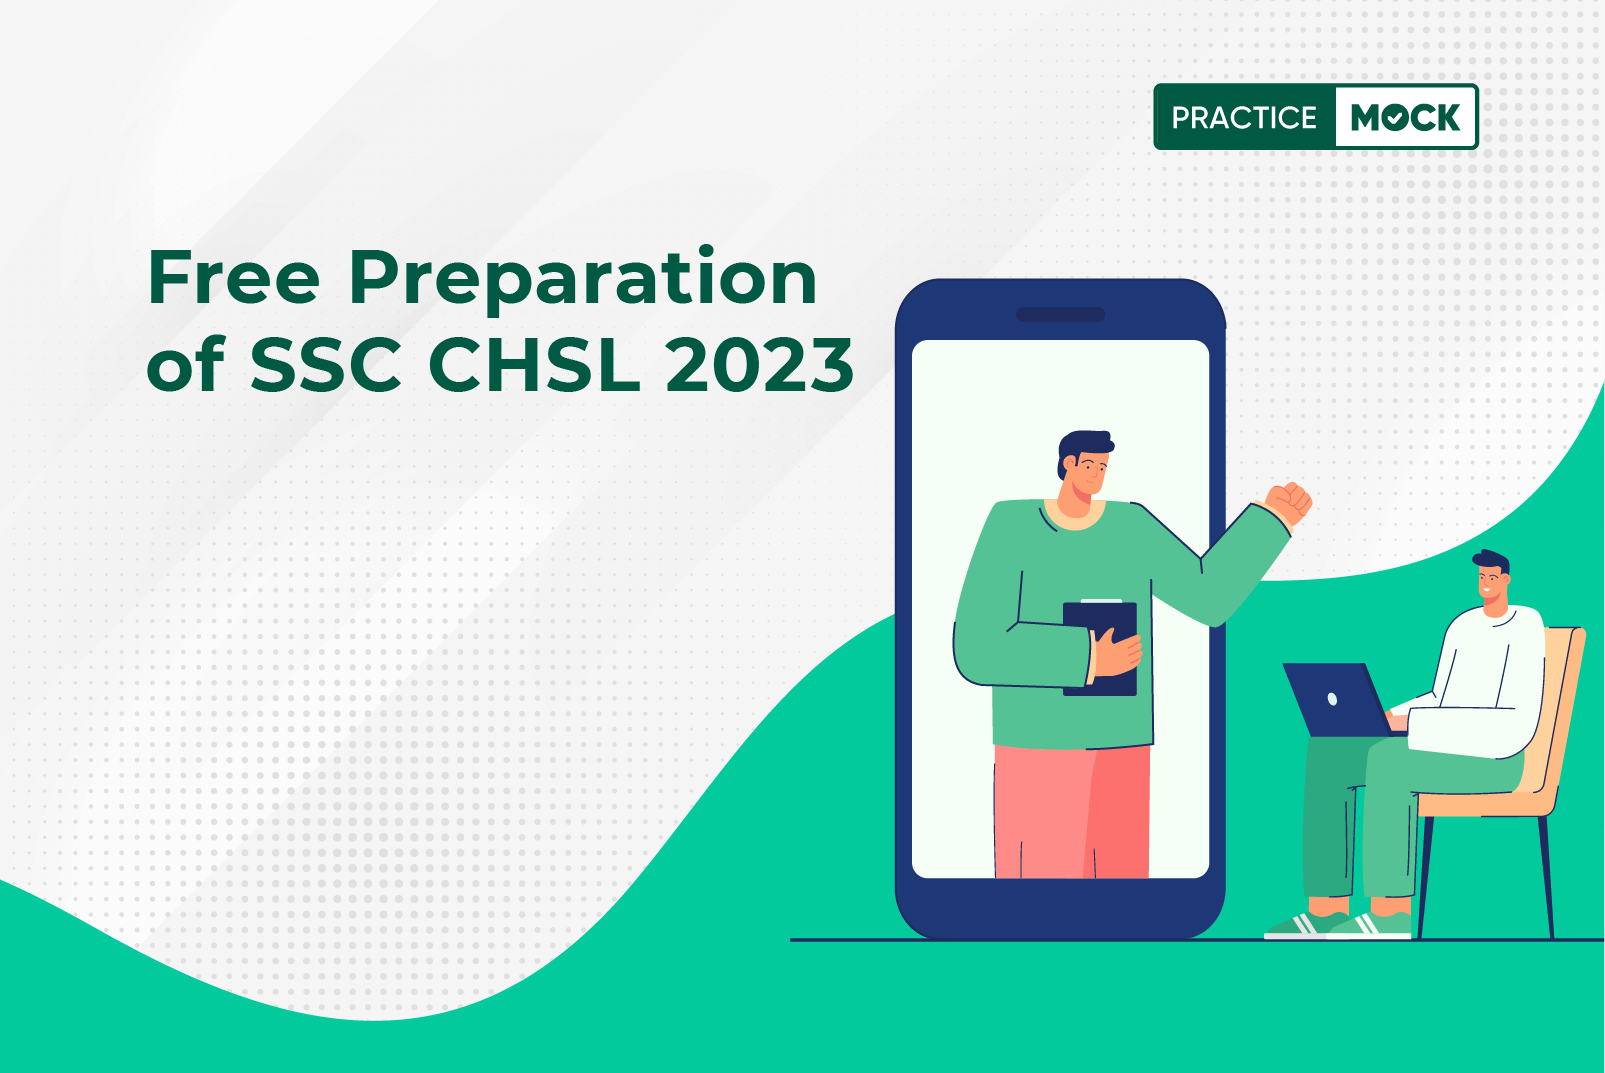 Free Preparation of SSC CHSL